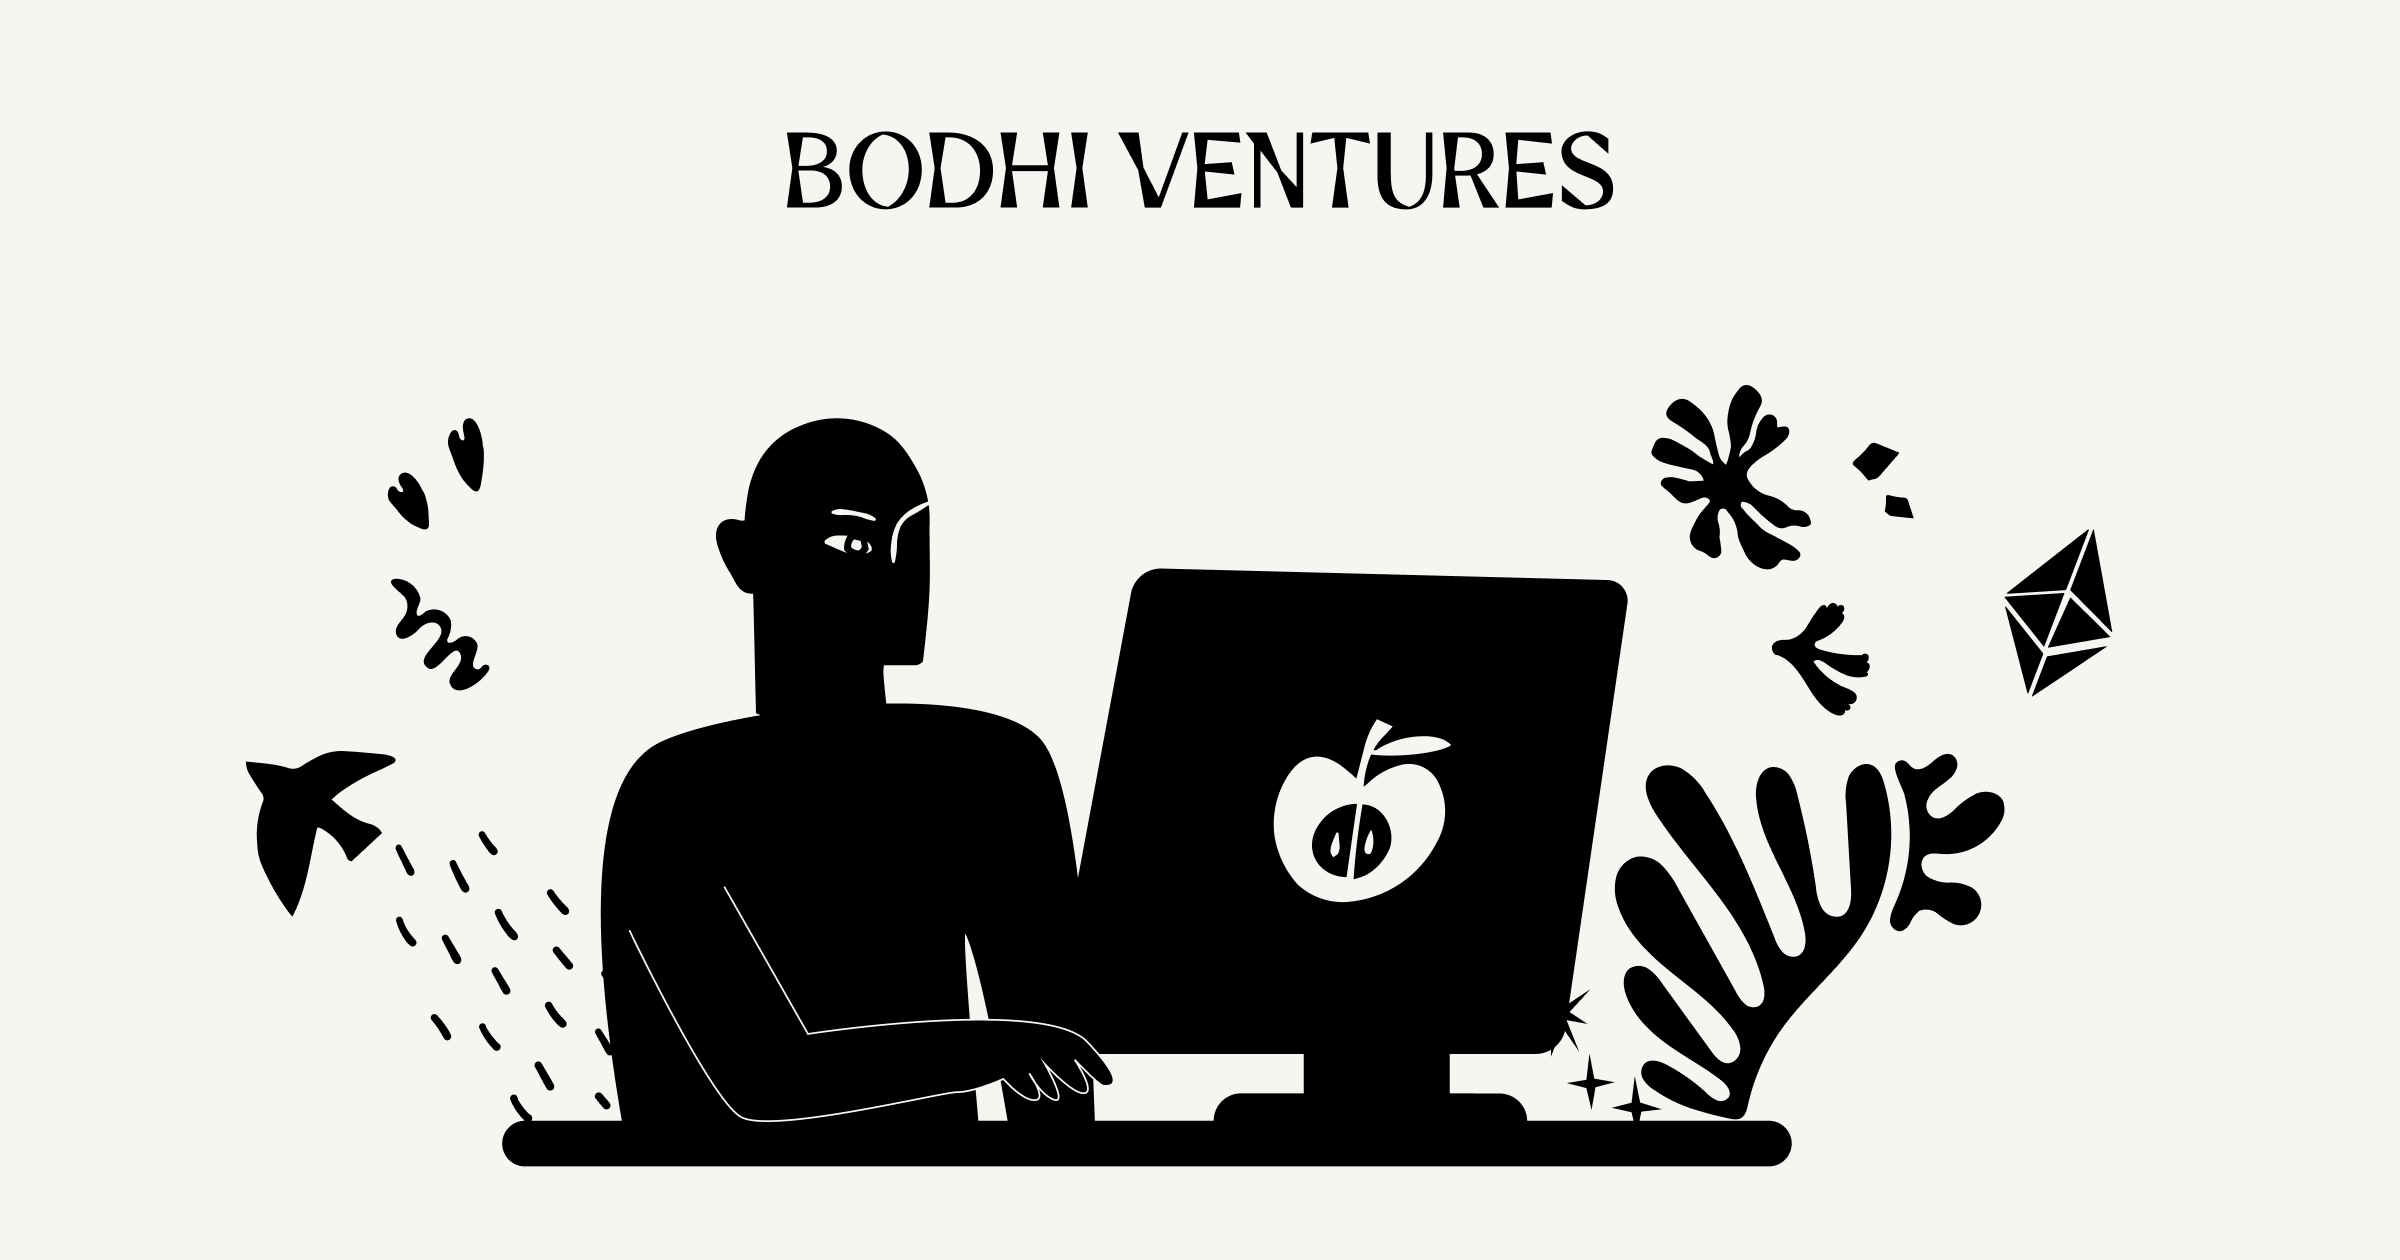 Bodhi Ventures